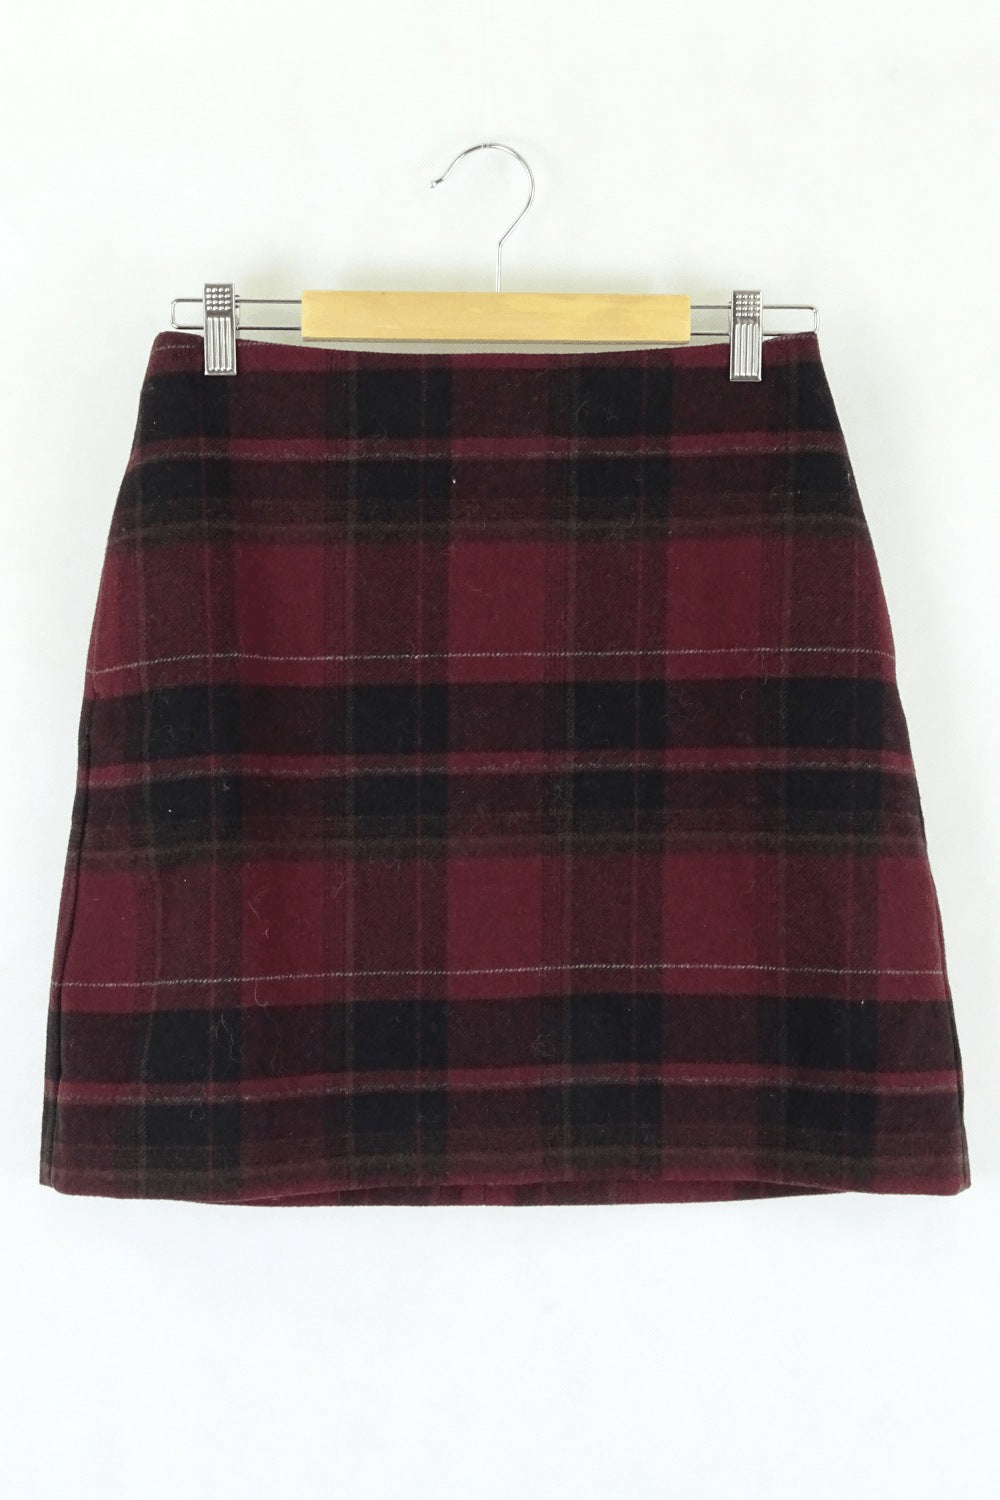 Uniqlo Maroon Skirt S